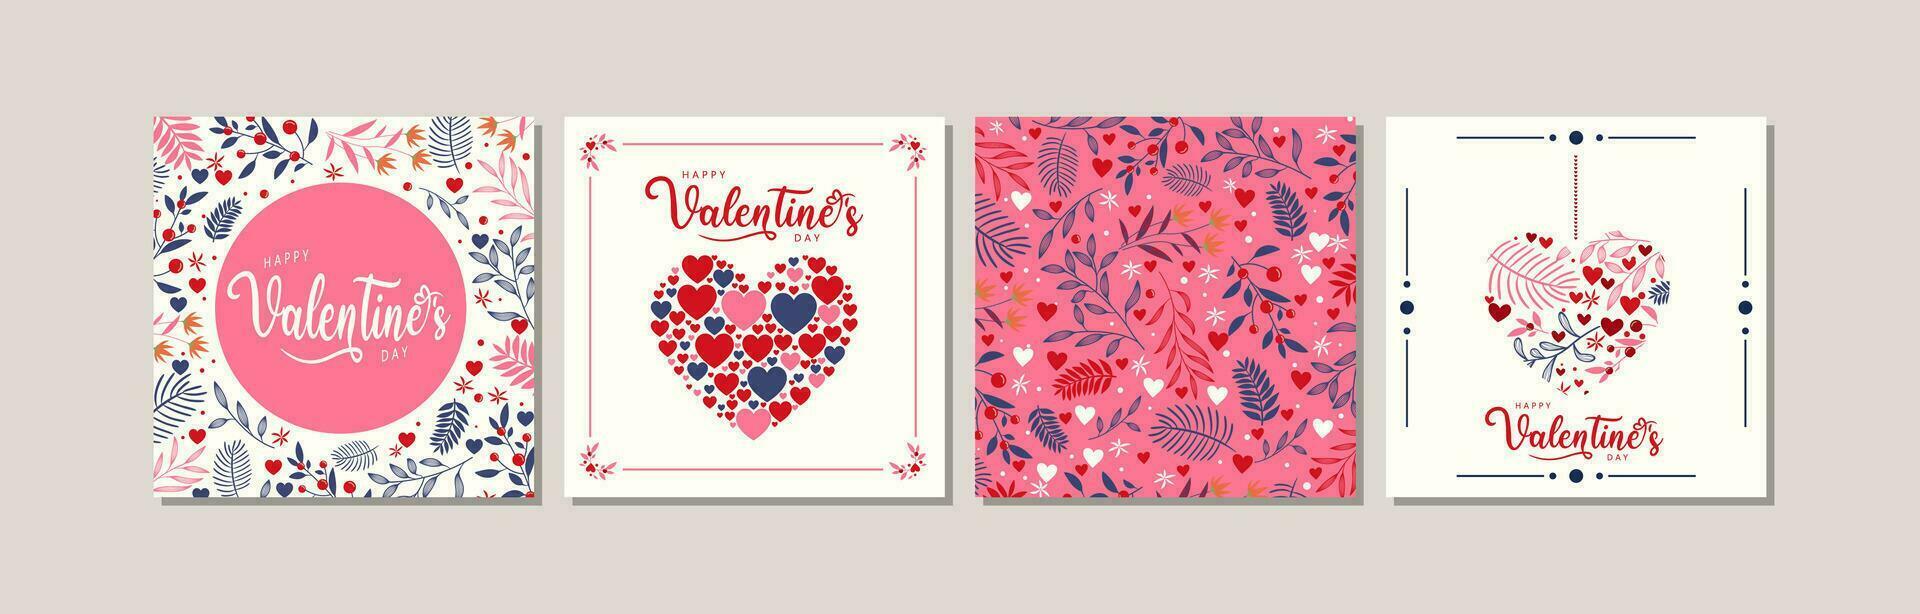 elegant Valentijnsdag dag reeks van groet kaarten, posters, sociaal media na, vakantie covers vector